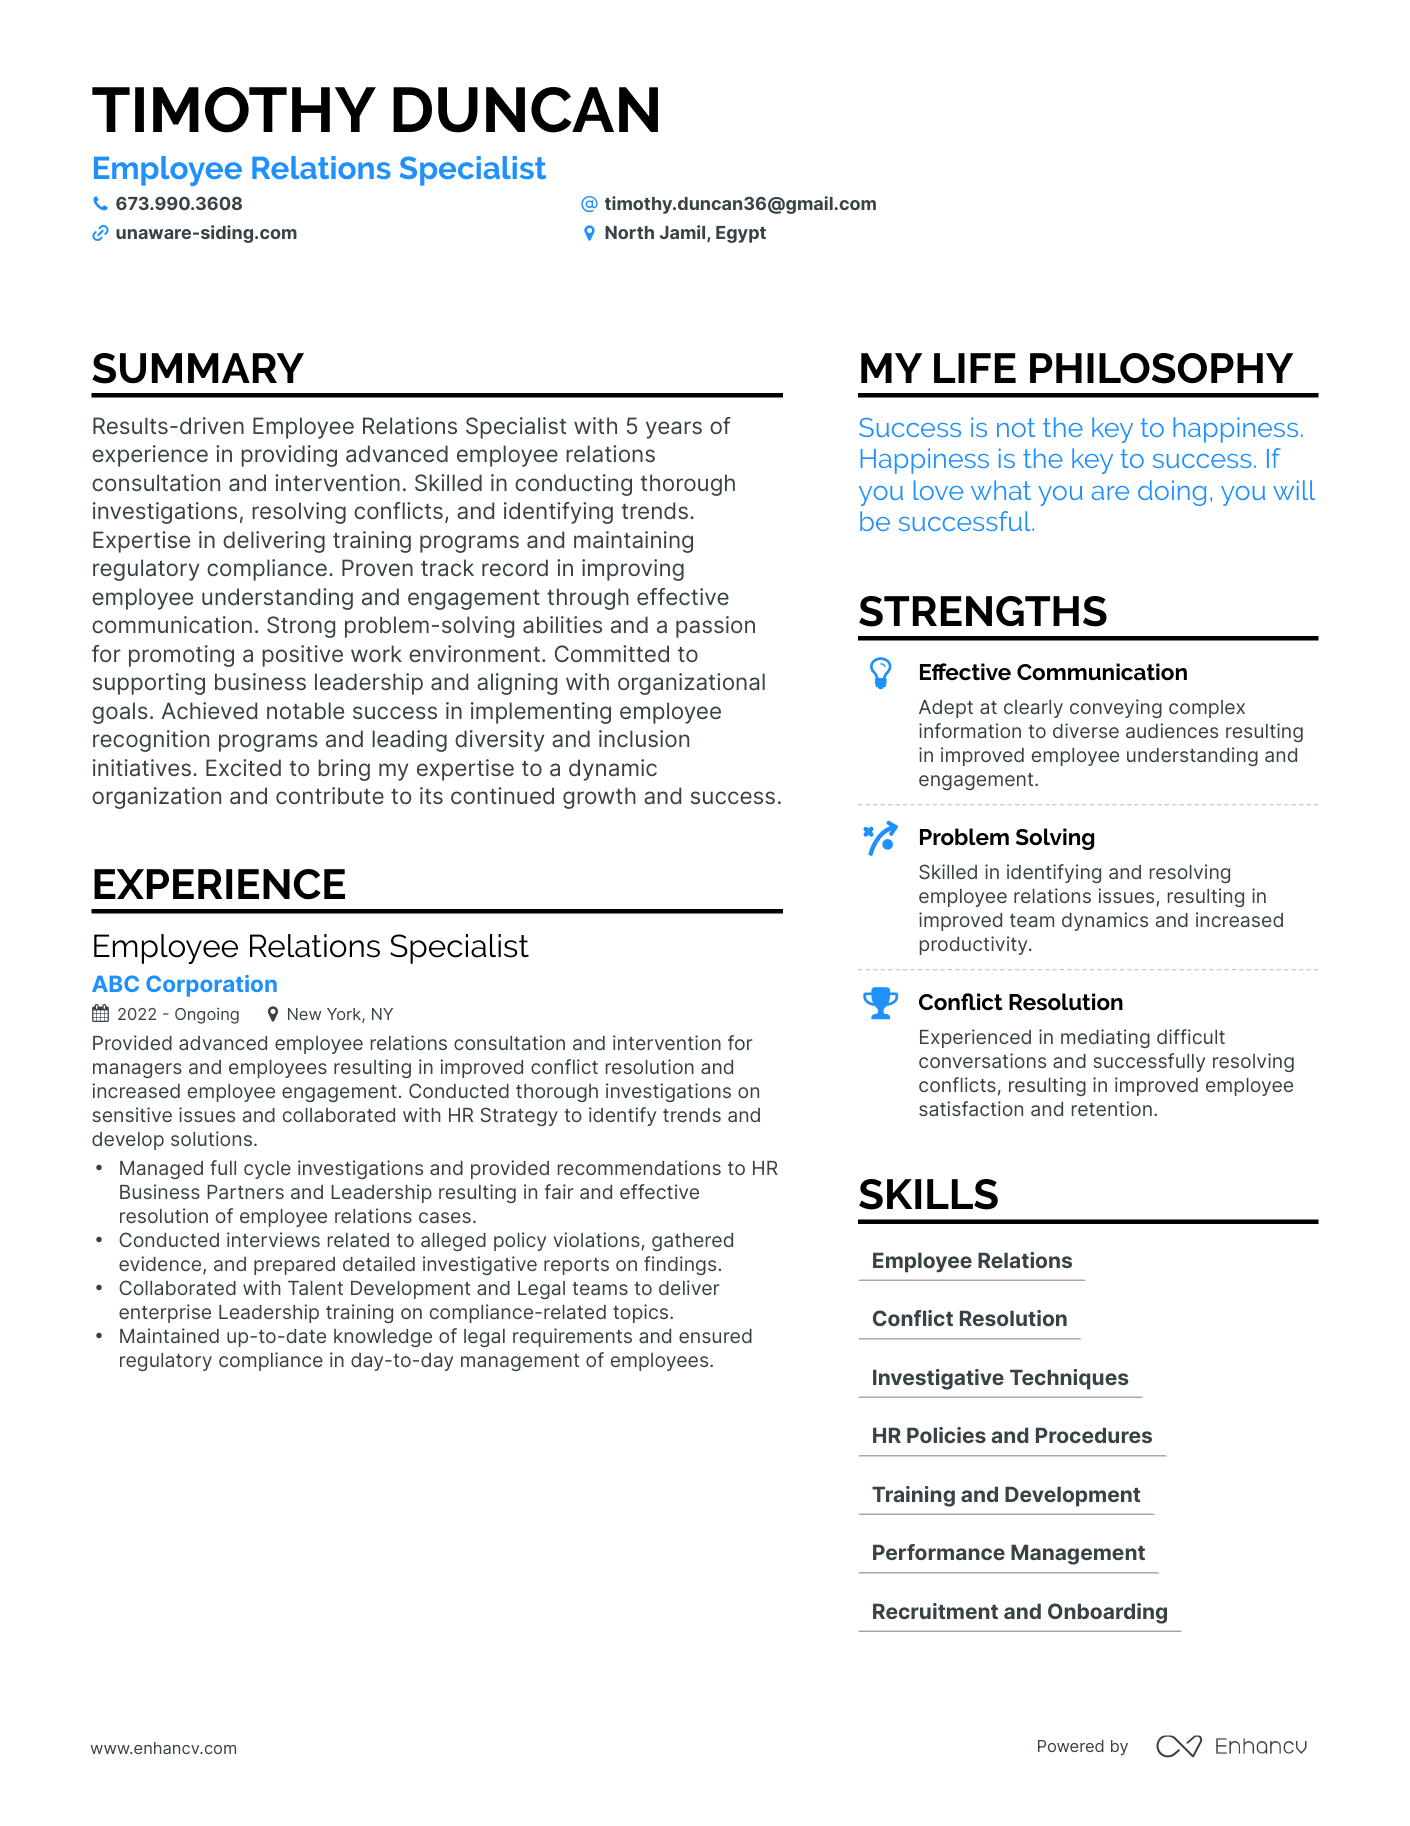 Employee Relations Specialist resume example